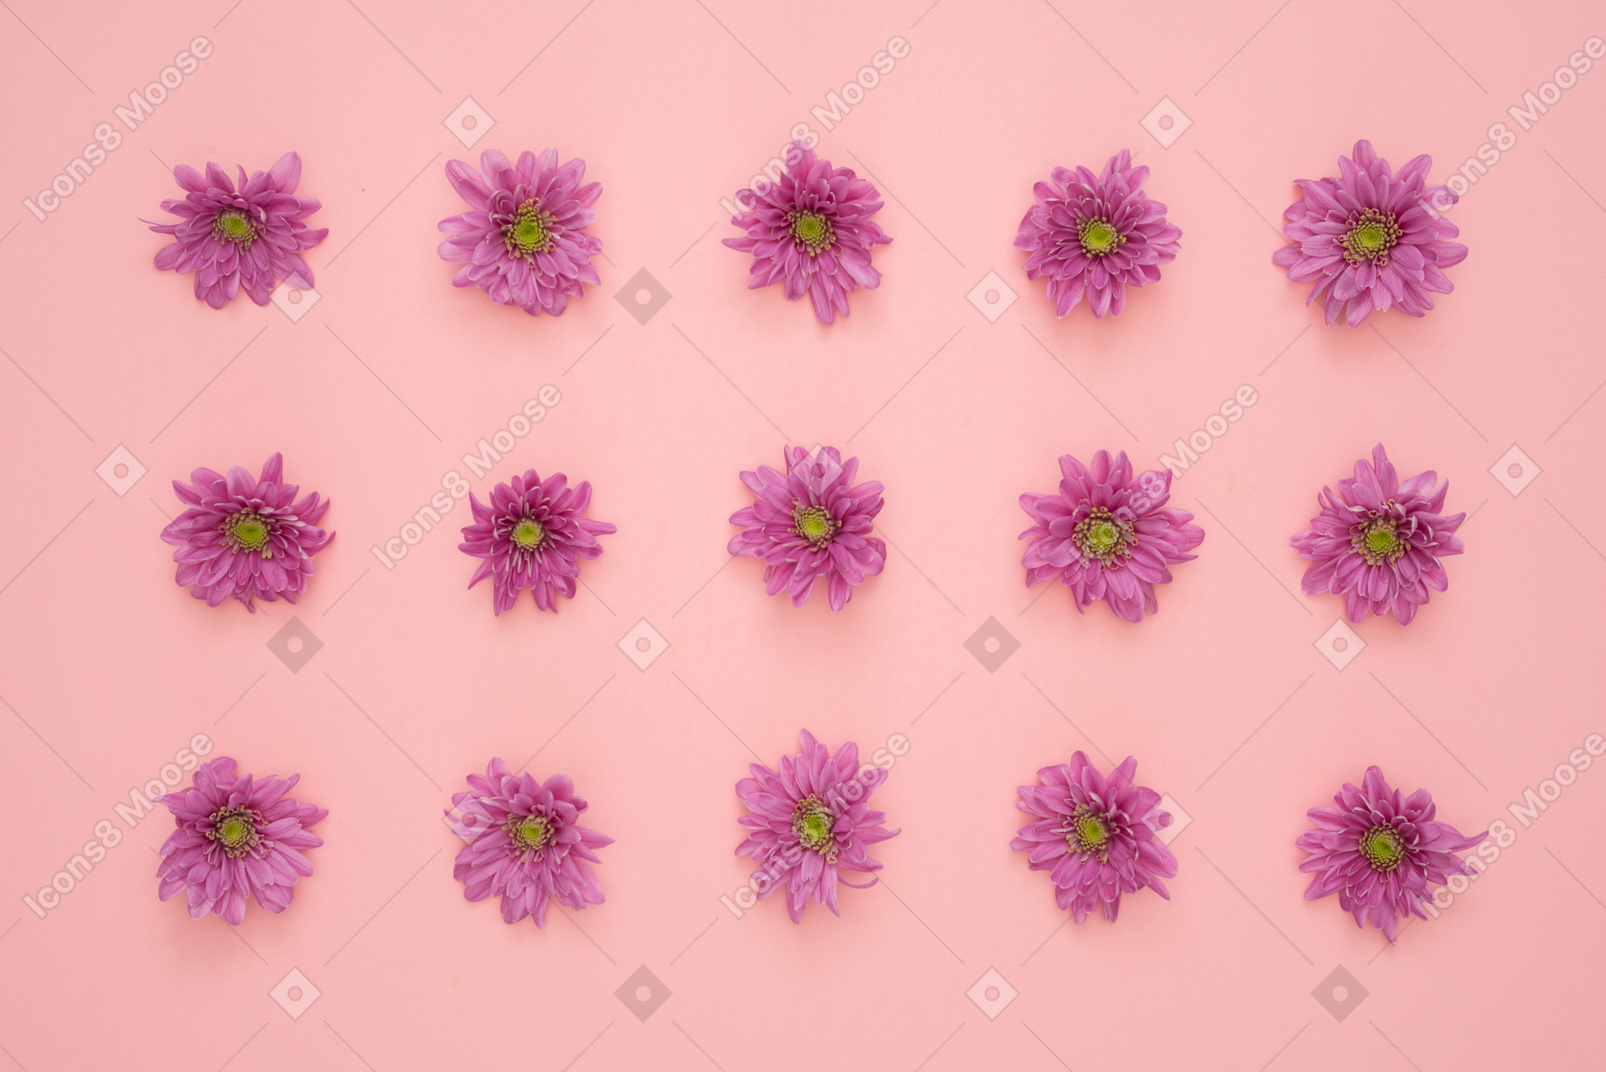 Flower heads